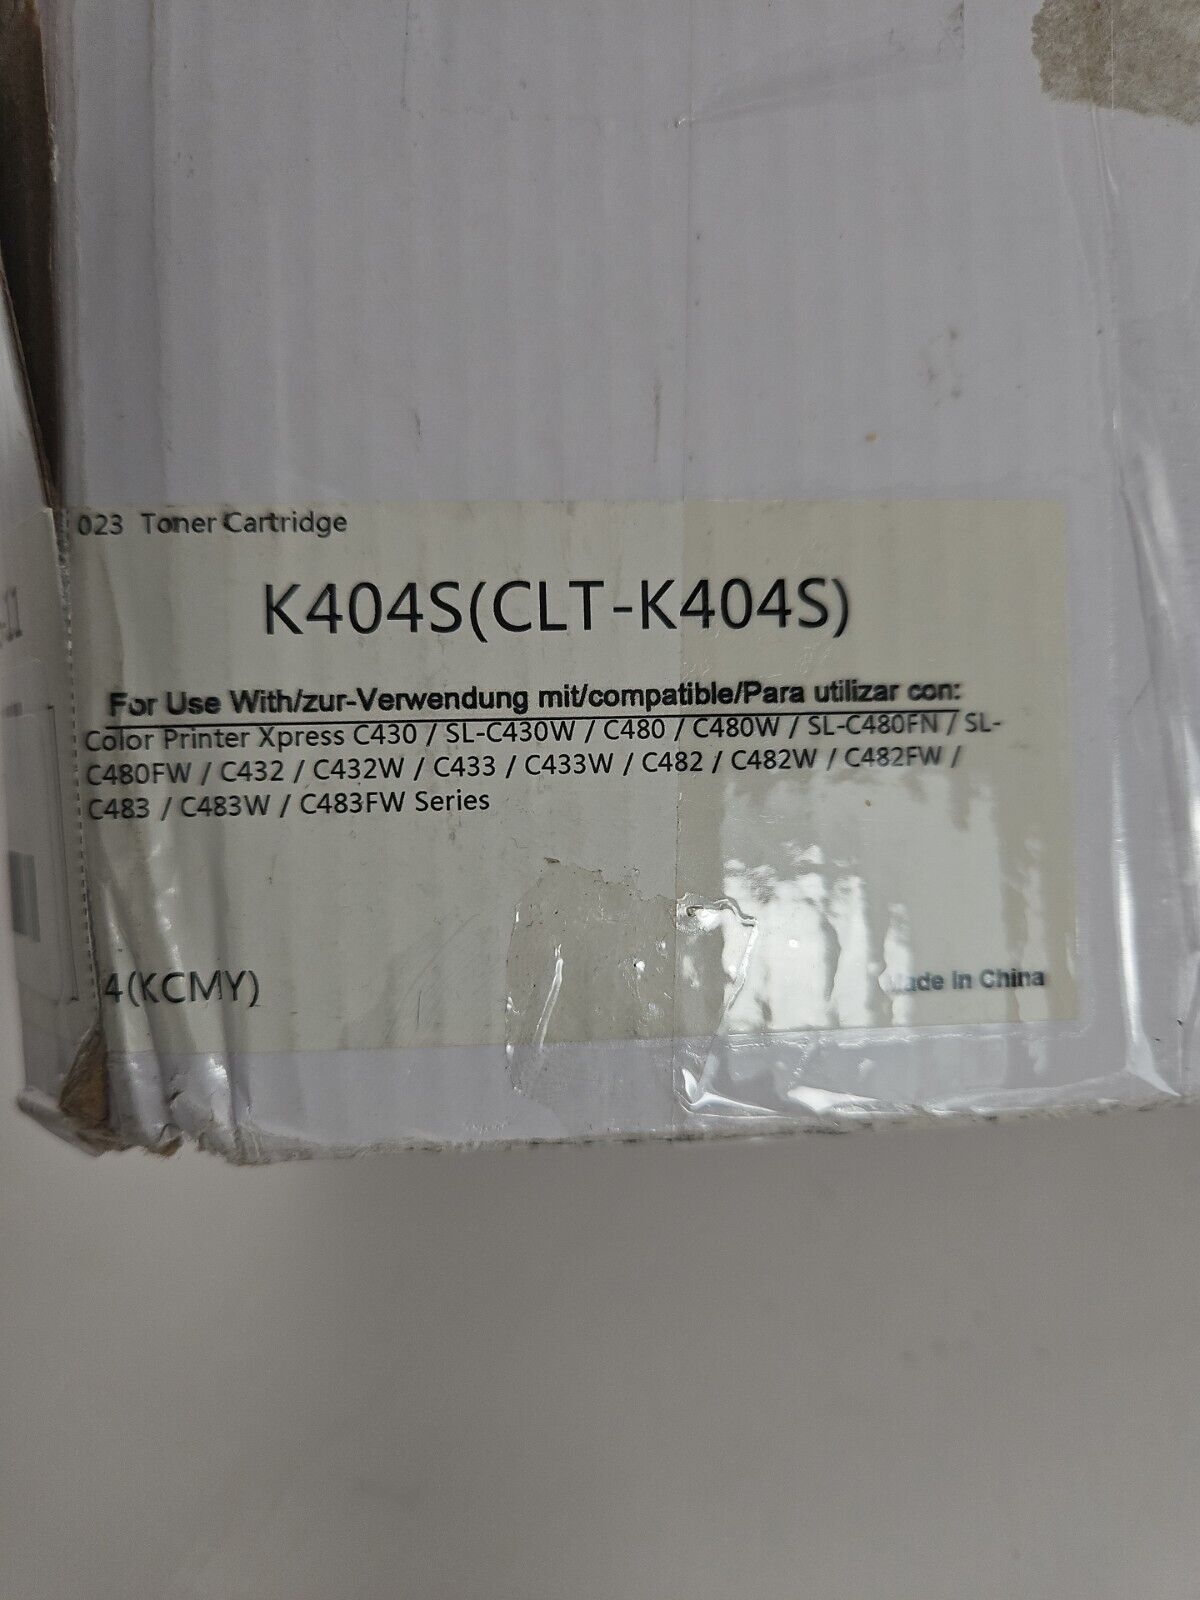 Toner Cartridge for Samsung 404S CLT-K404S K404S Xpress C480FW C480W C430W C480